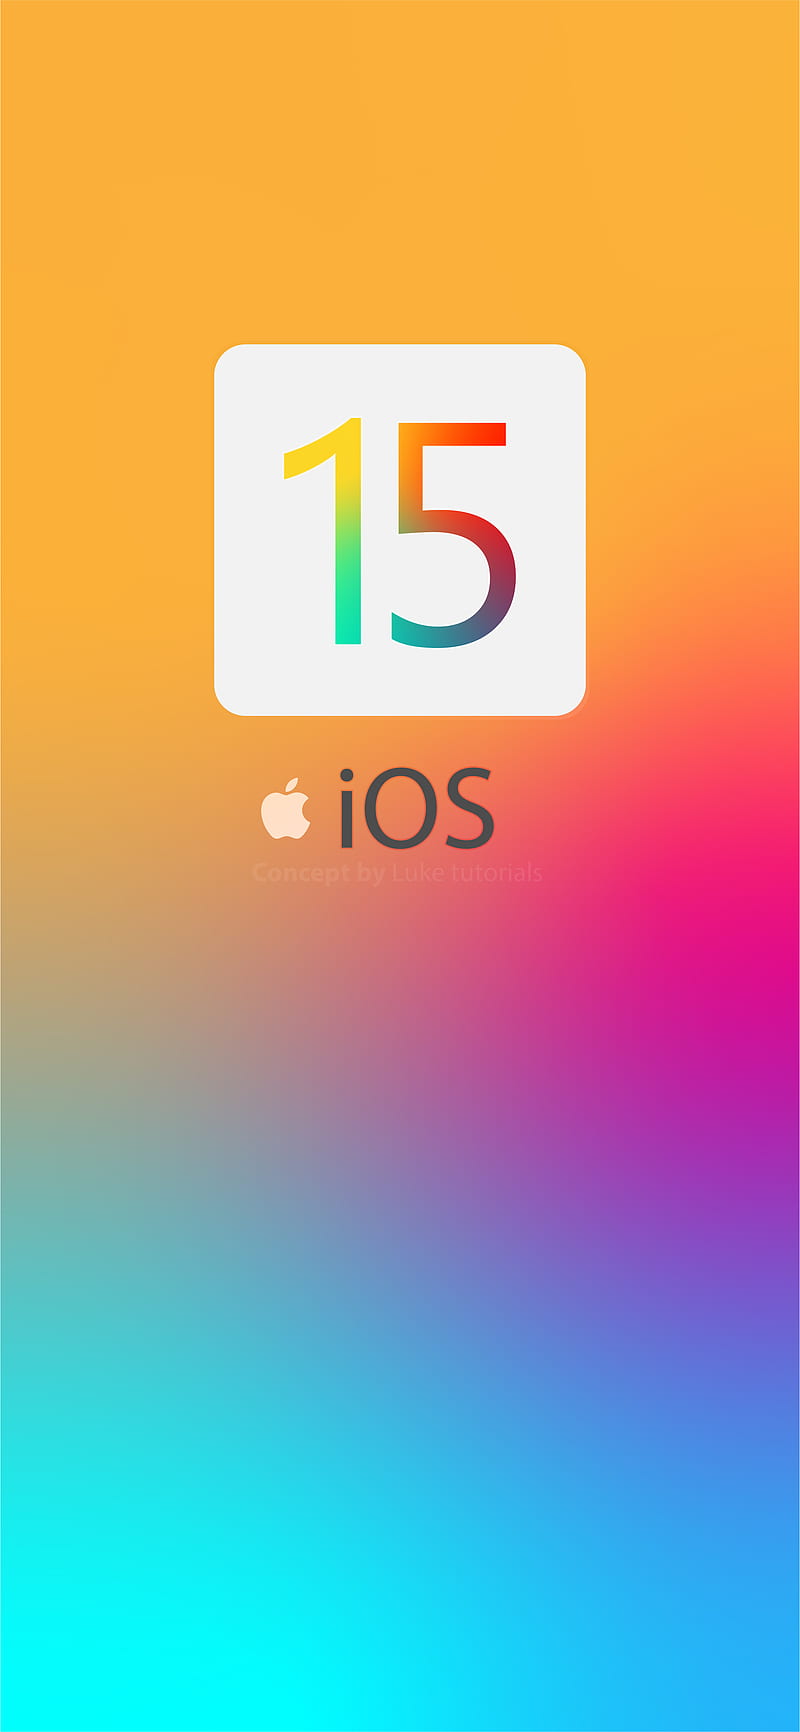 iOS 17 - The Concept on Behance